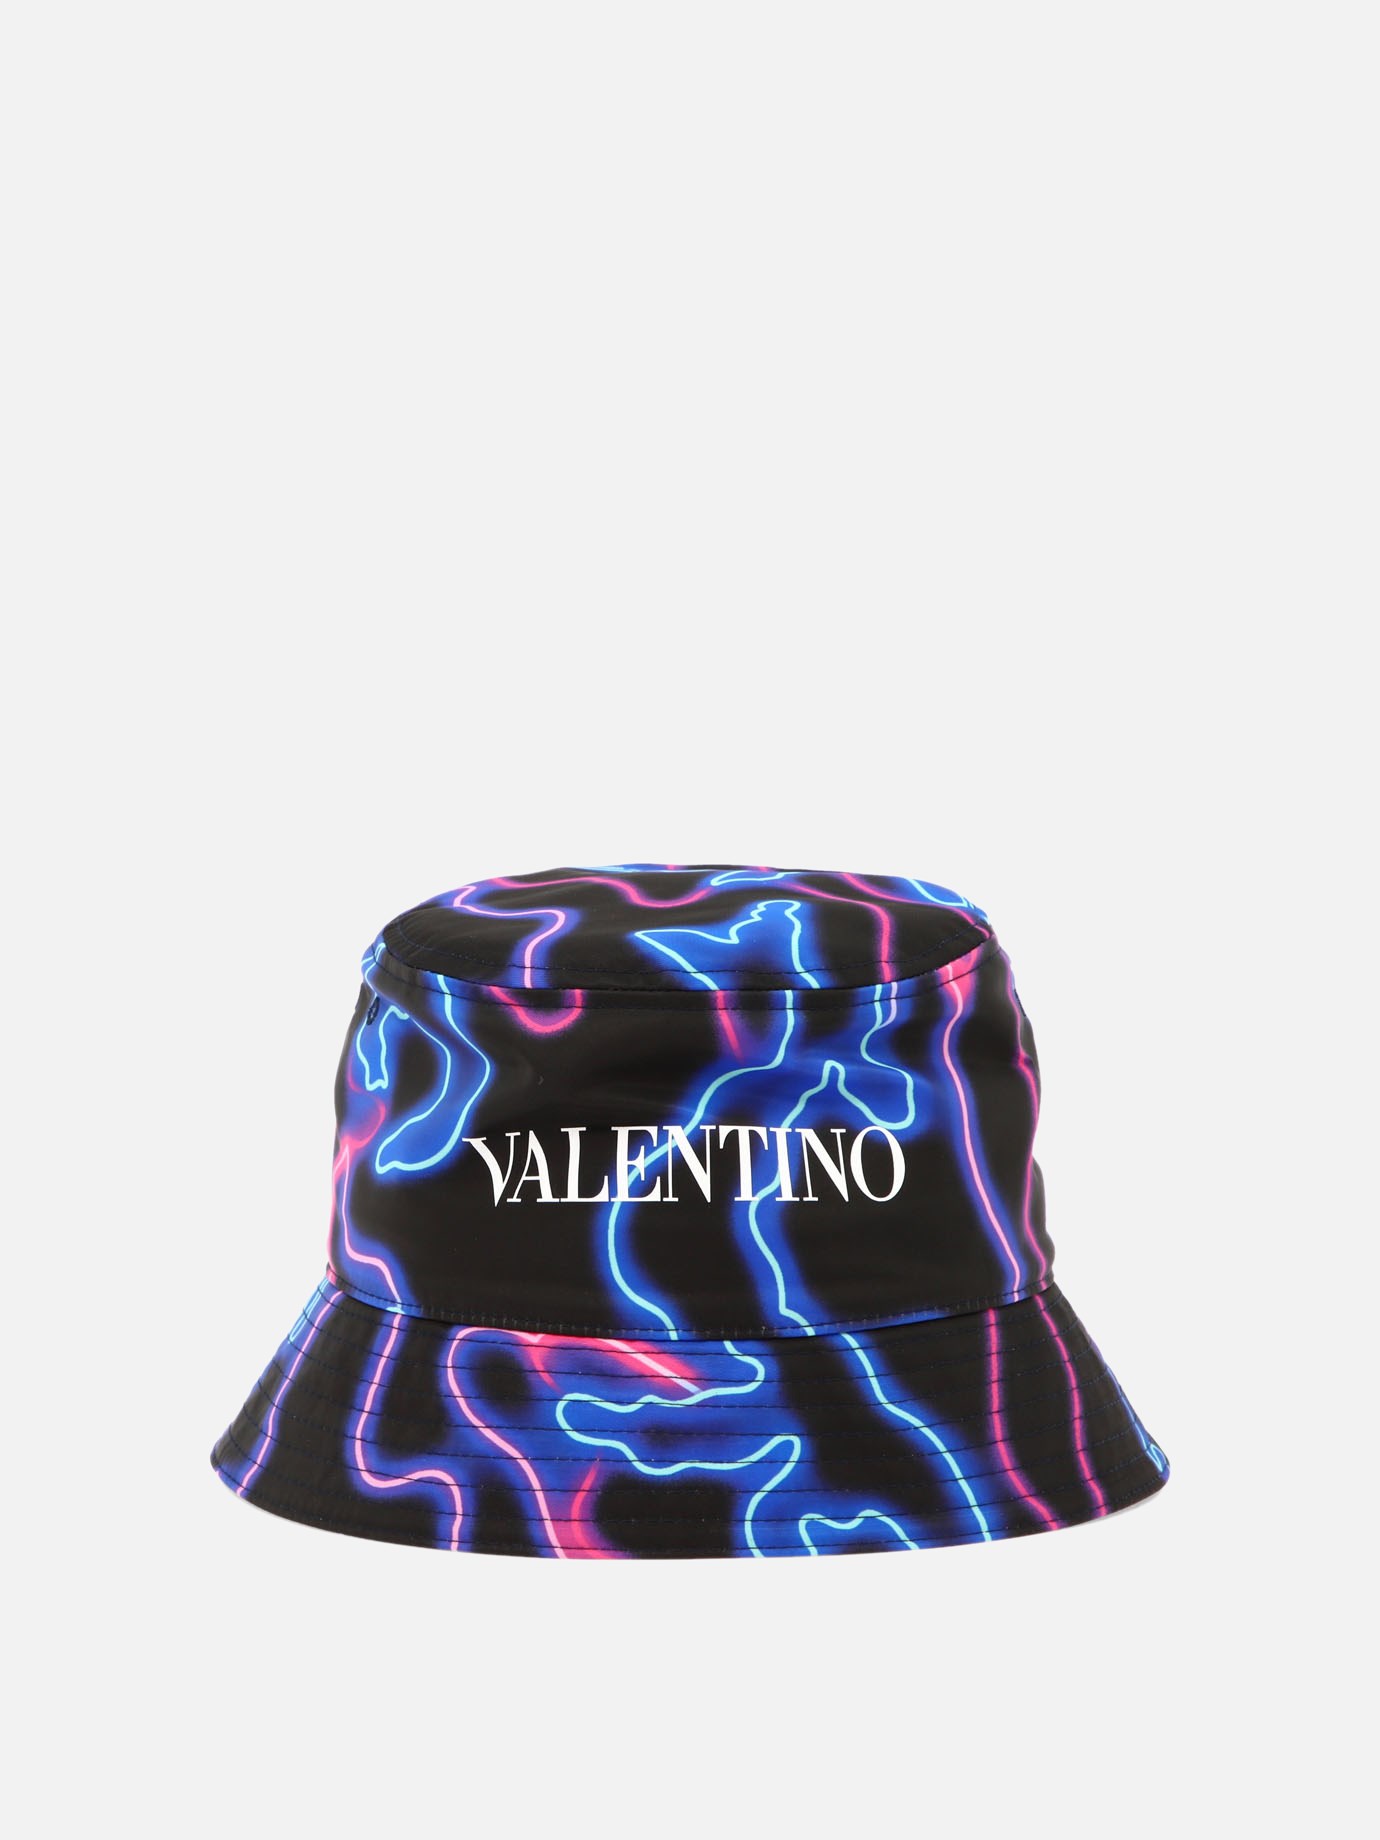  Neon Camou  bucket hatby Valentino Garavani - 2